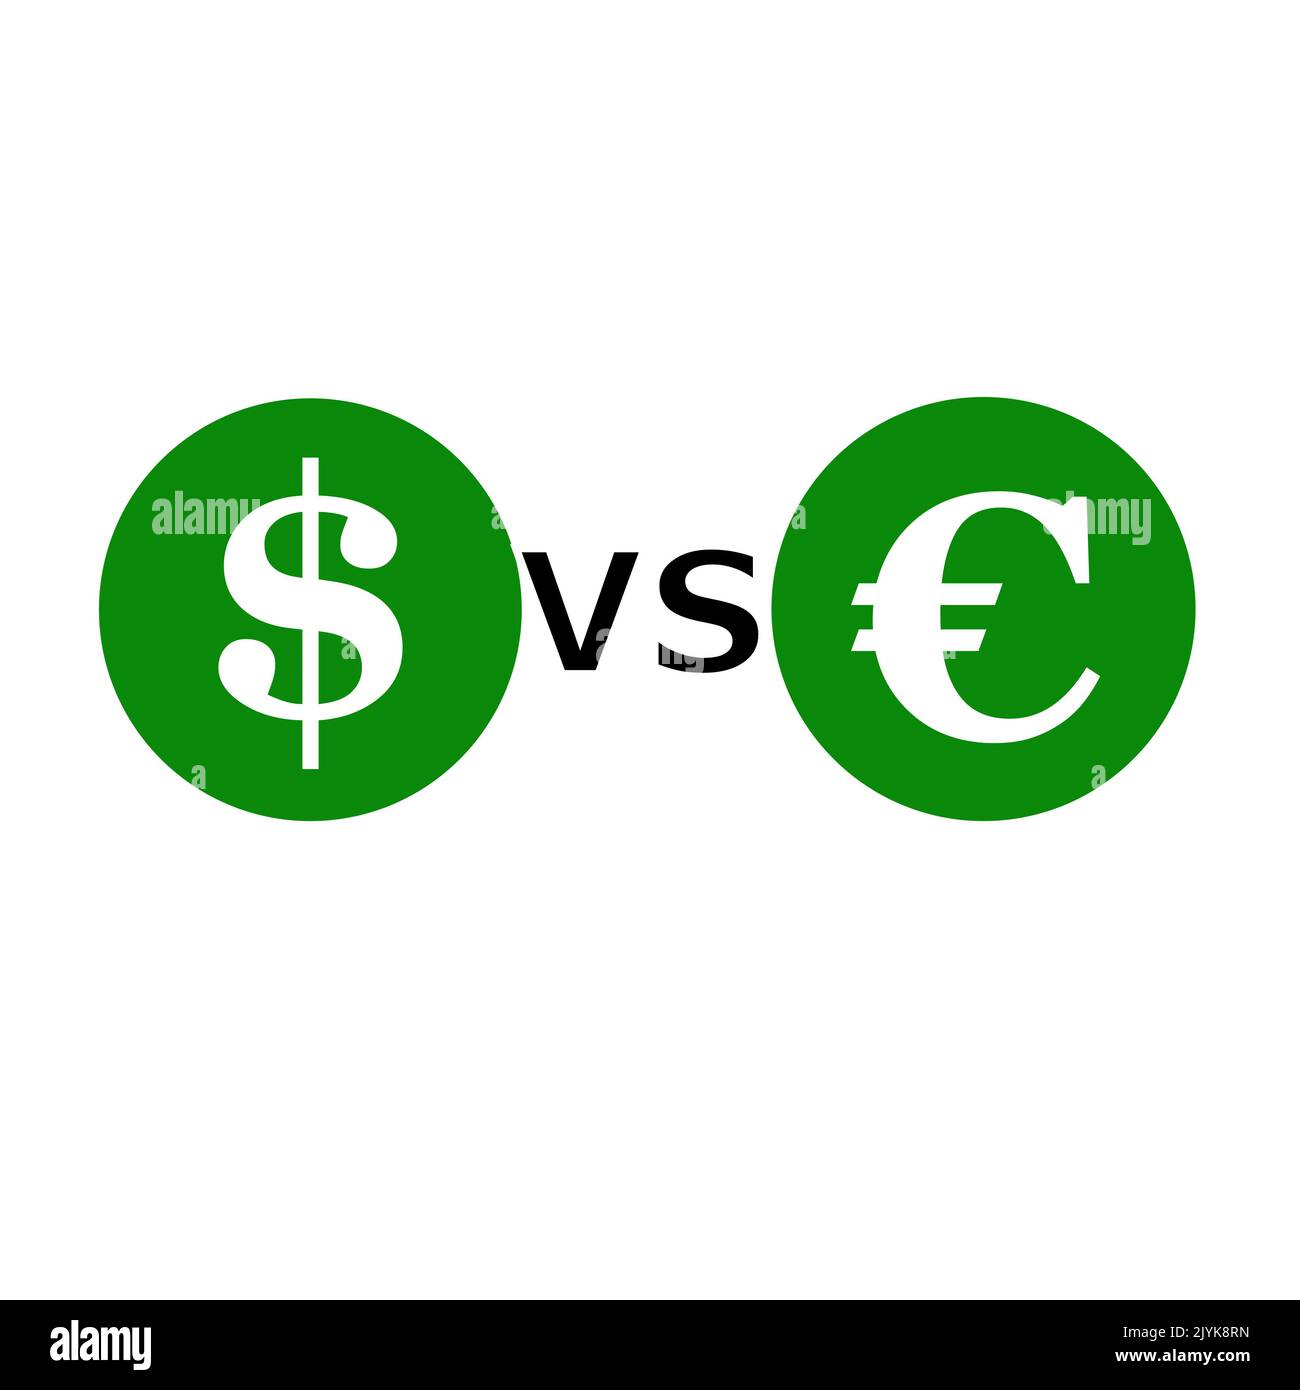 Dollar versus Euro icons. Economy concept. Illustration isolated on white background Stock Photo